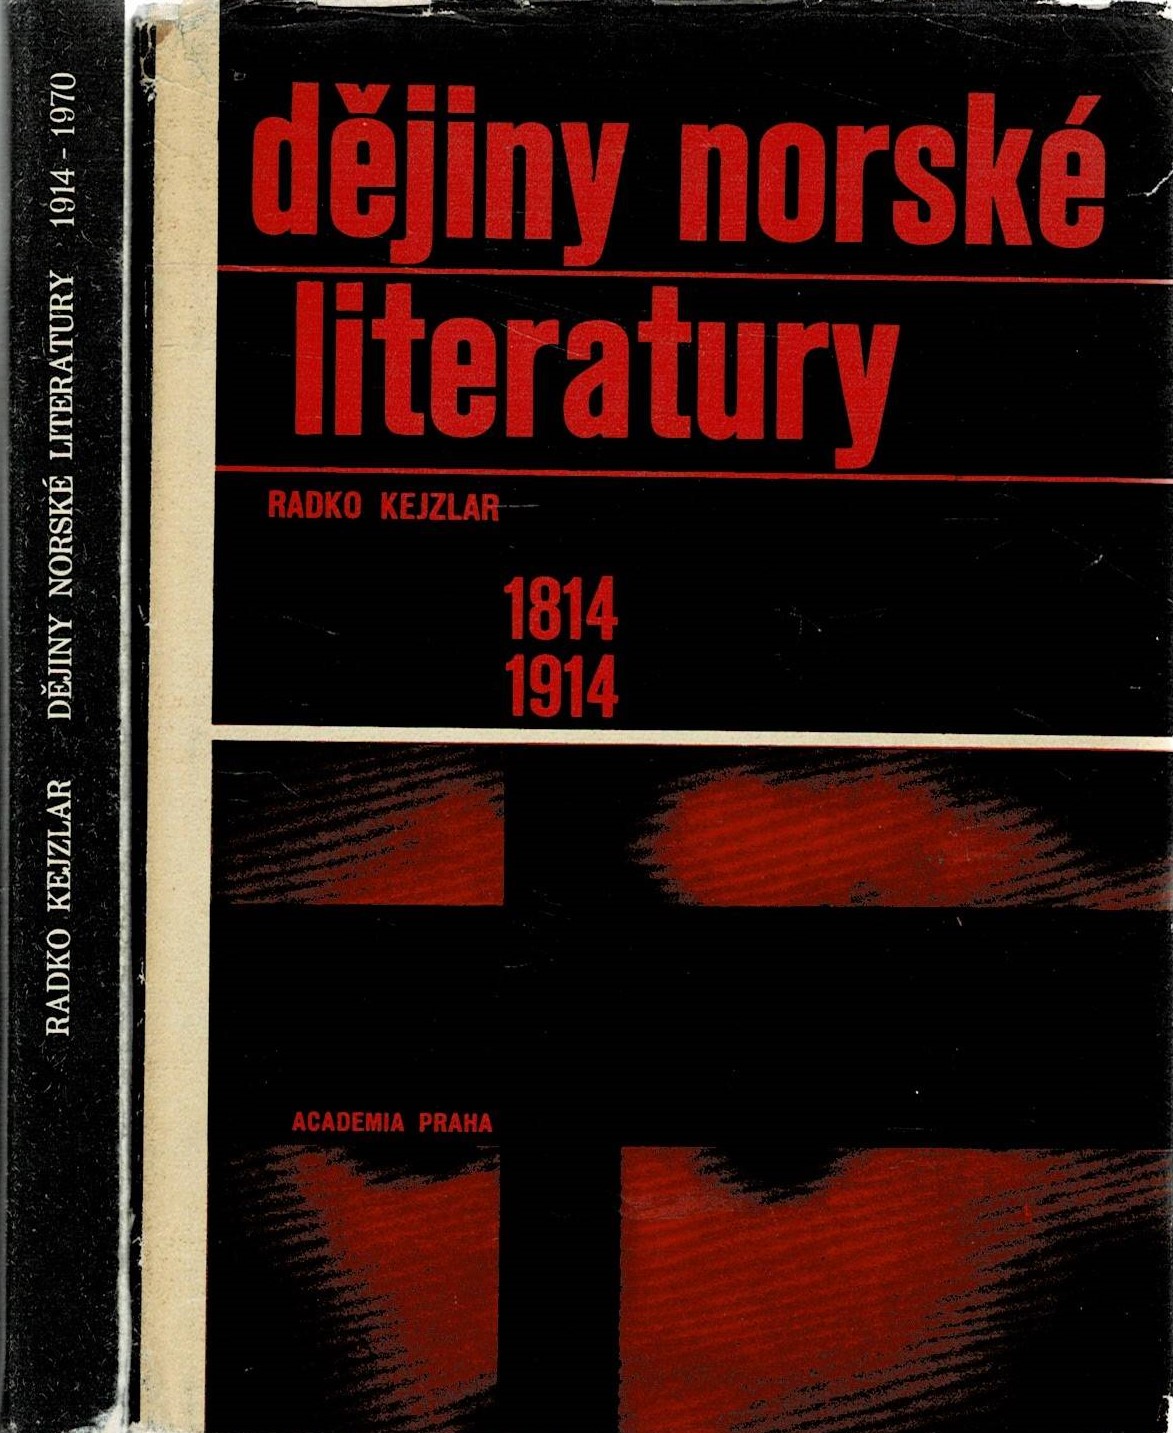 Kejzlar, Radko: Dějiny norské literatury 1814-1914 a 1914-1970